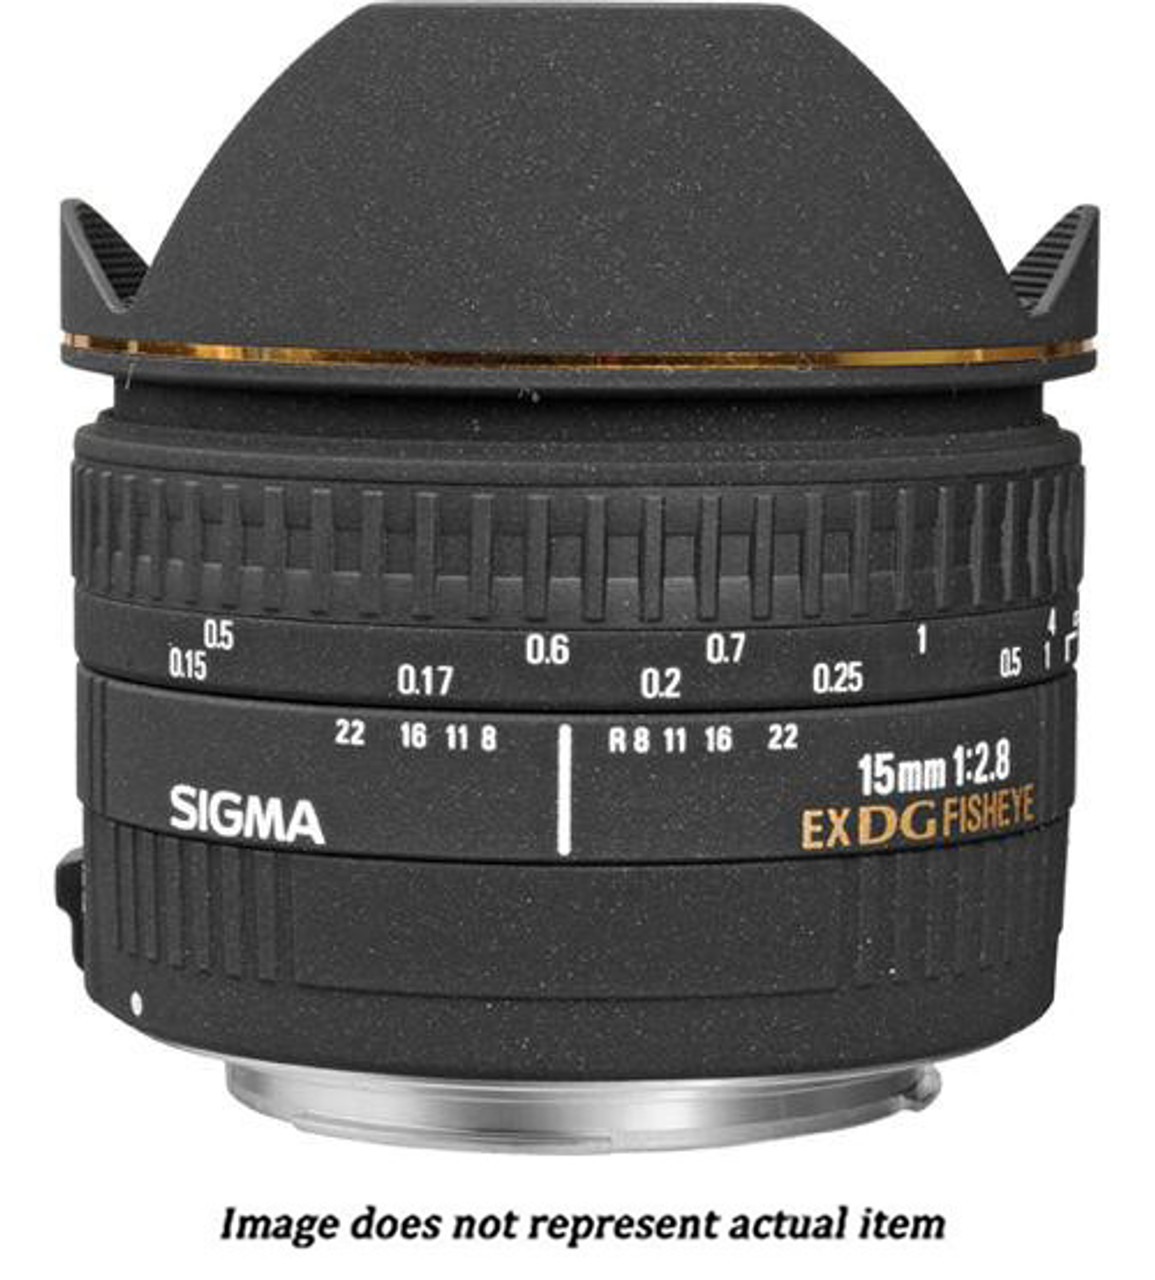 15mm f/2.8D EX Fisheye for Nikon (USED) - S/N 1013537 - Allen's Camera